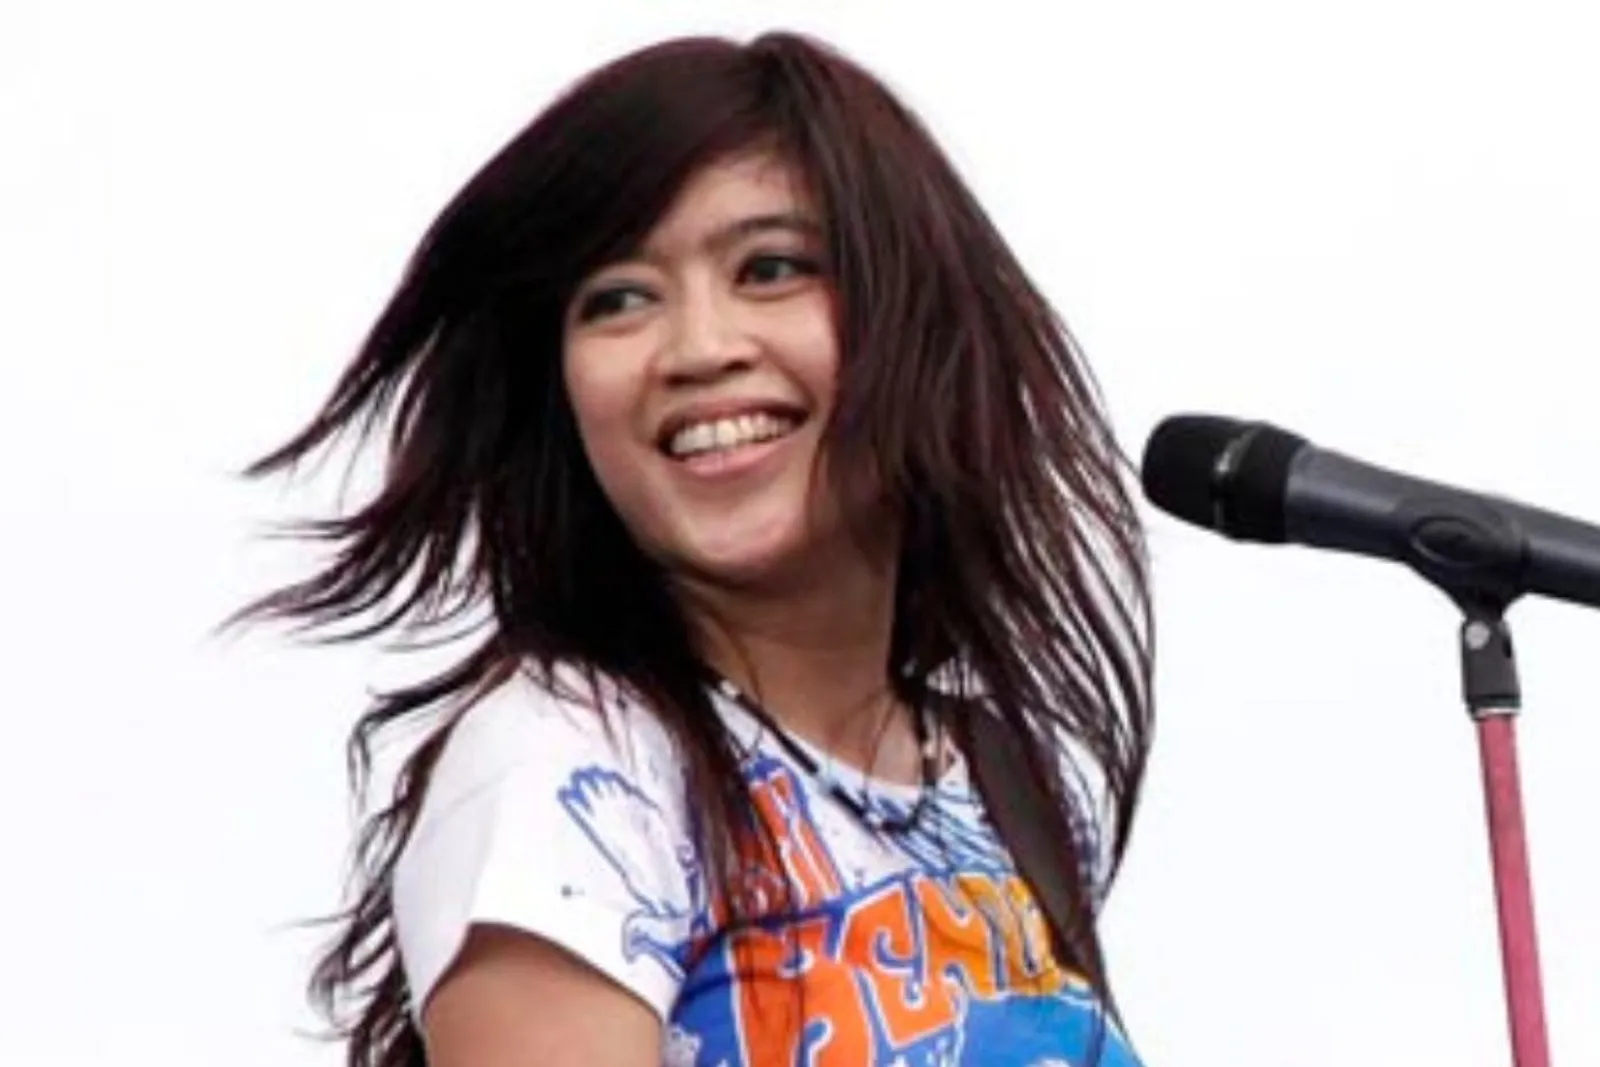 Widi 'Vierratale' dan Potret Lawas Vokalis Perempuan Band Indonesia